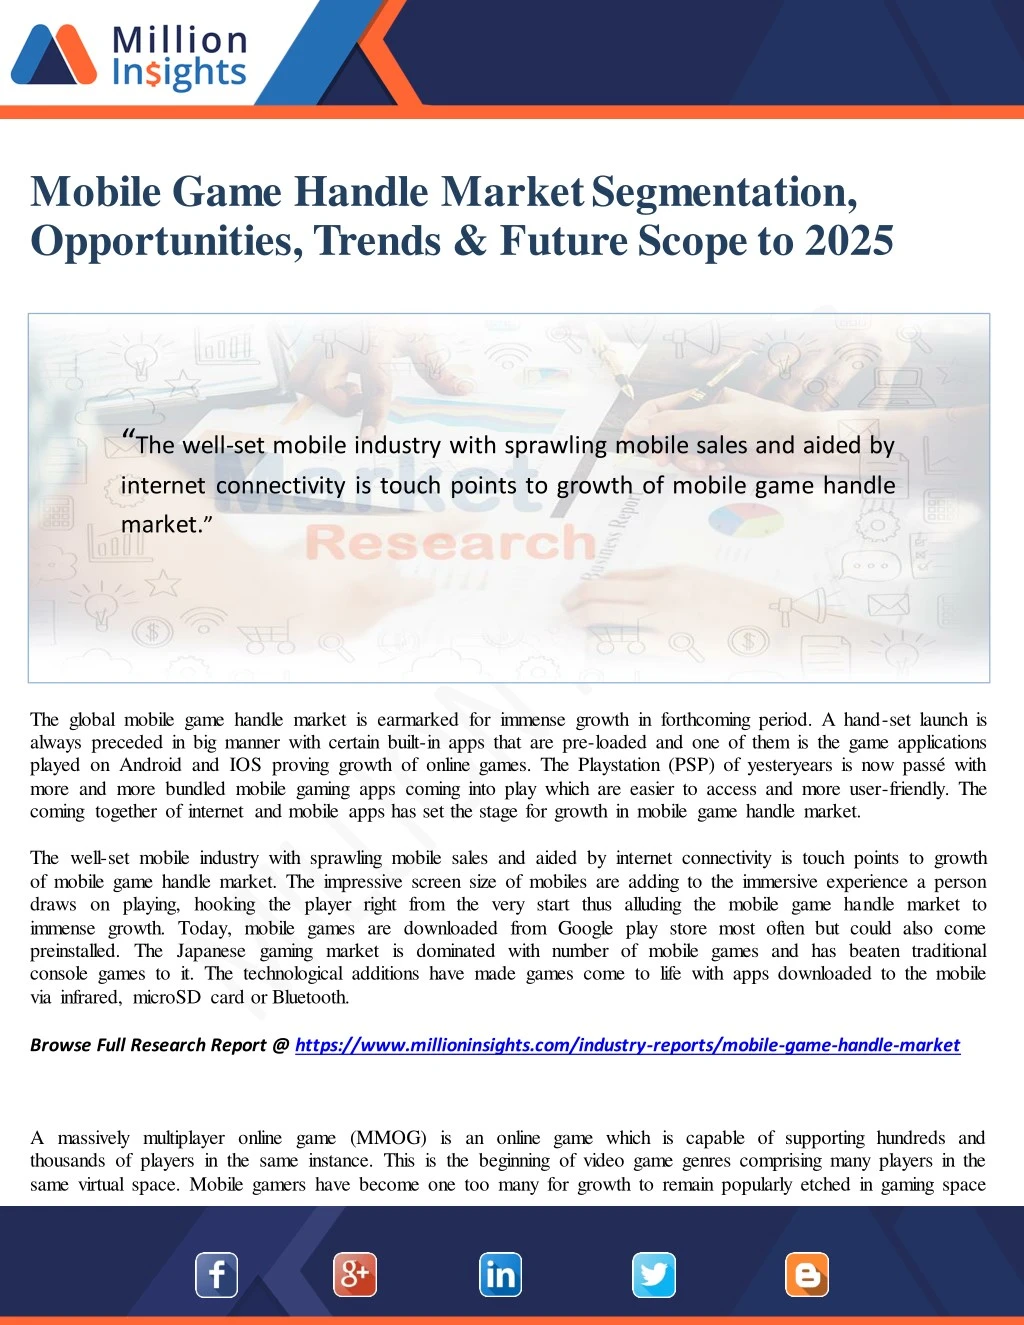 mobile game handle market segmentation